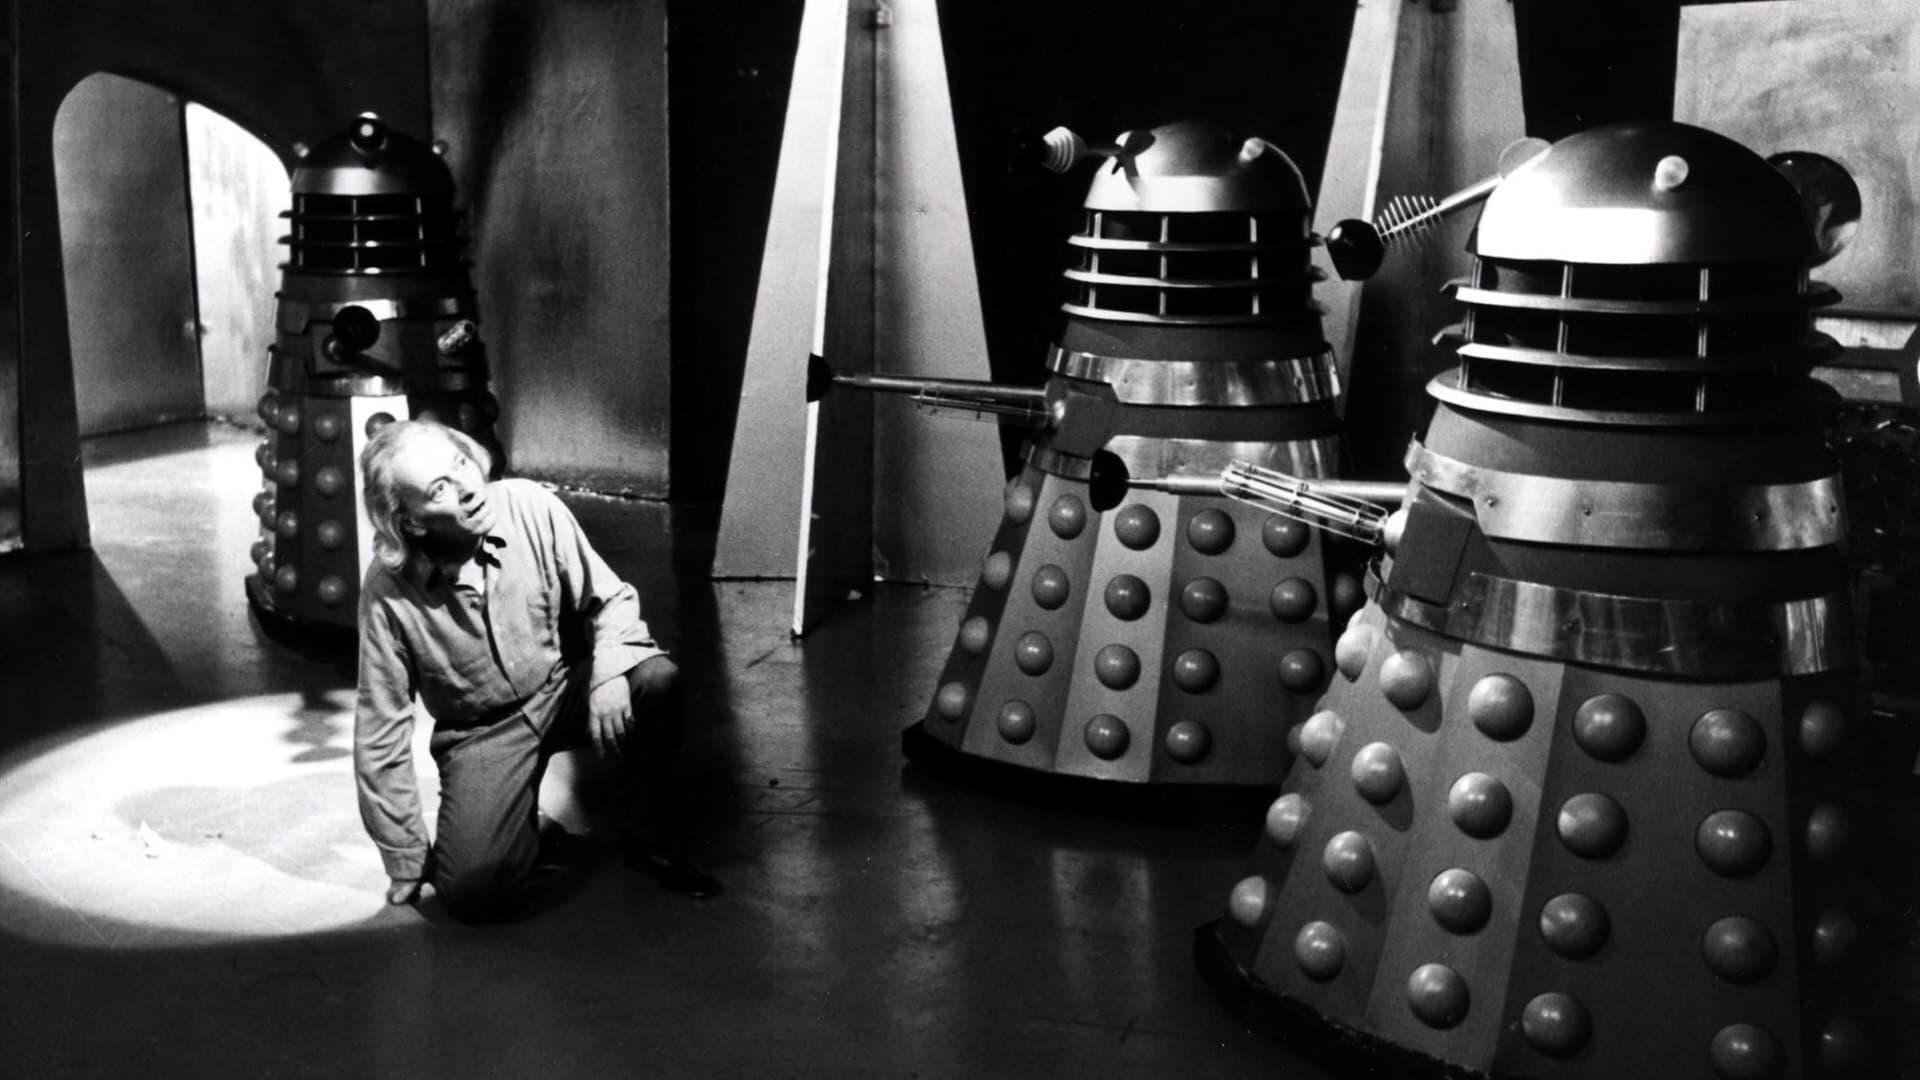 Doctor Who: The Daleks backdrop